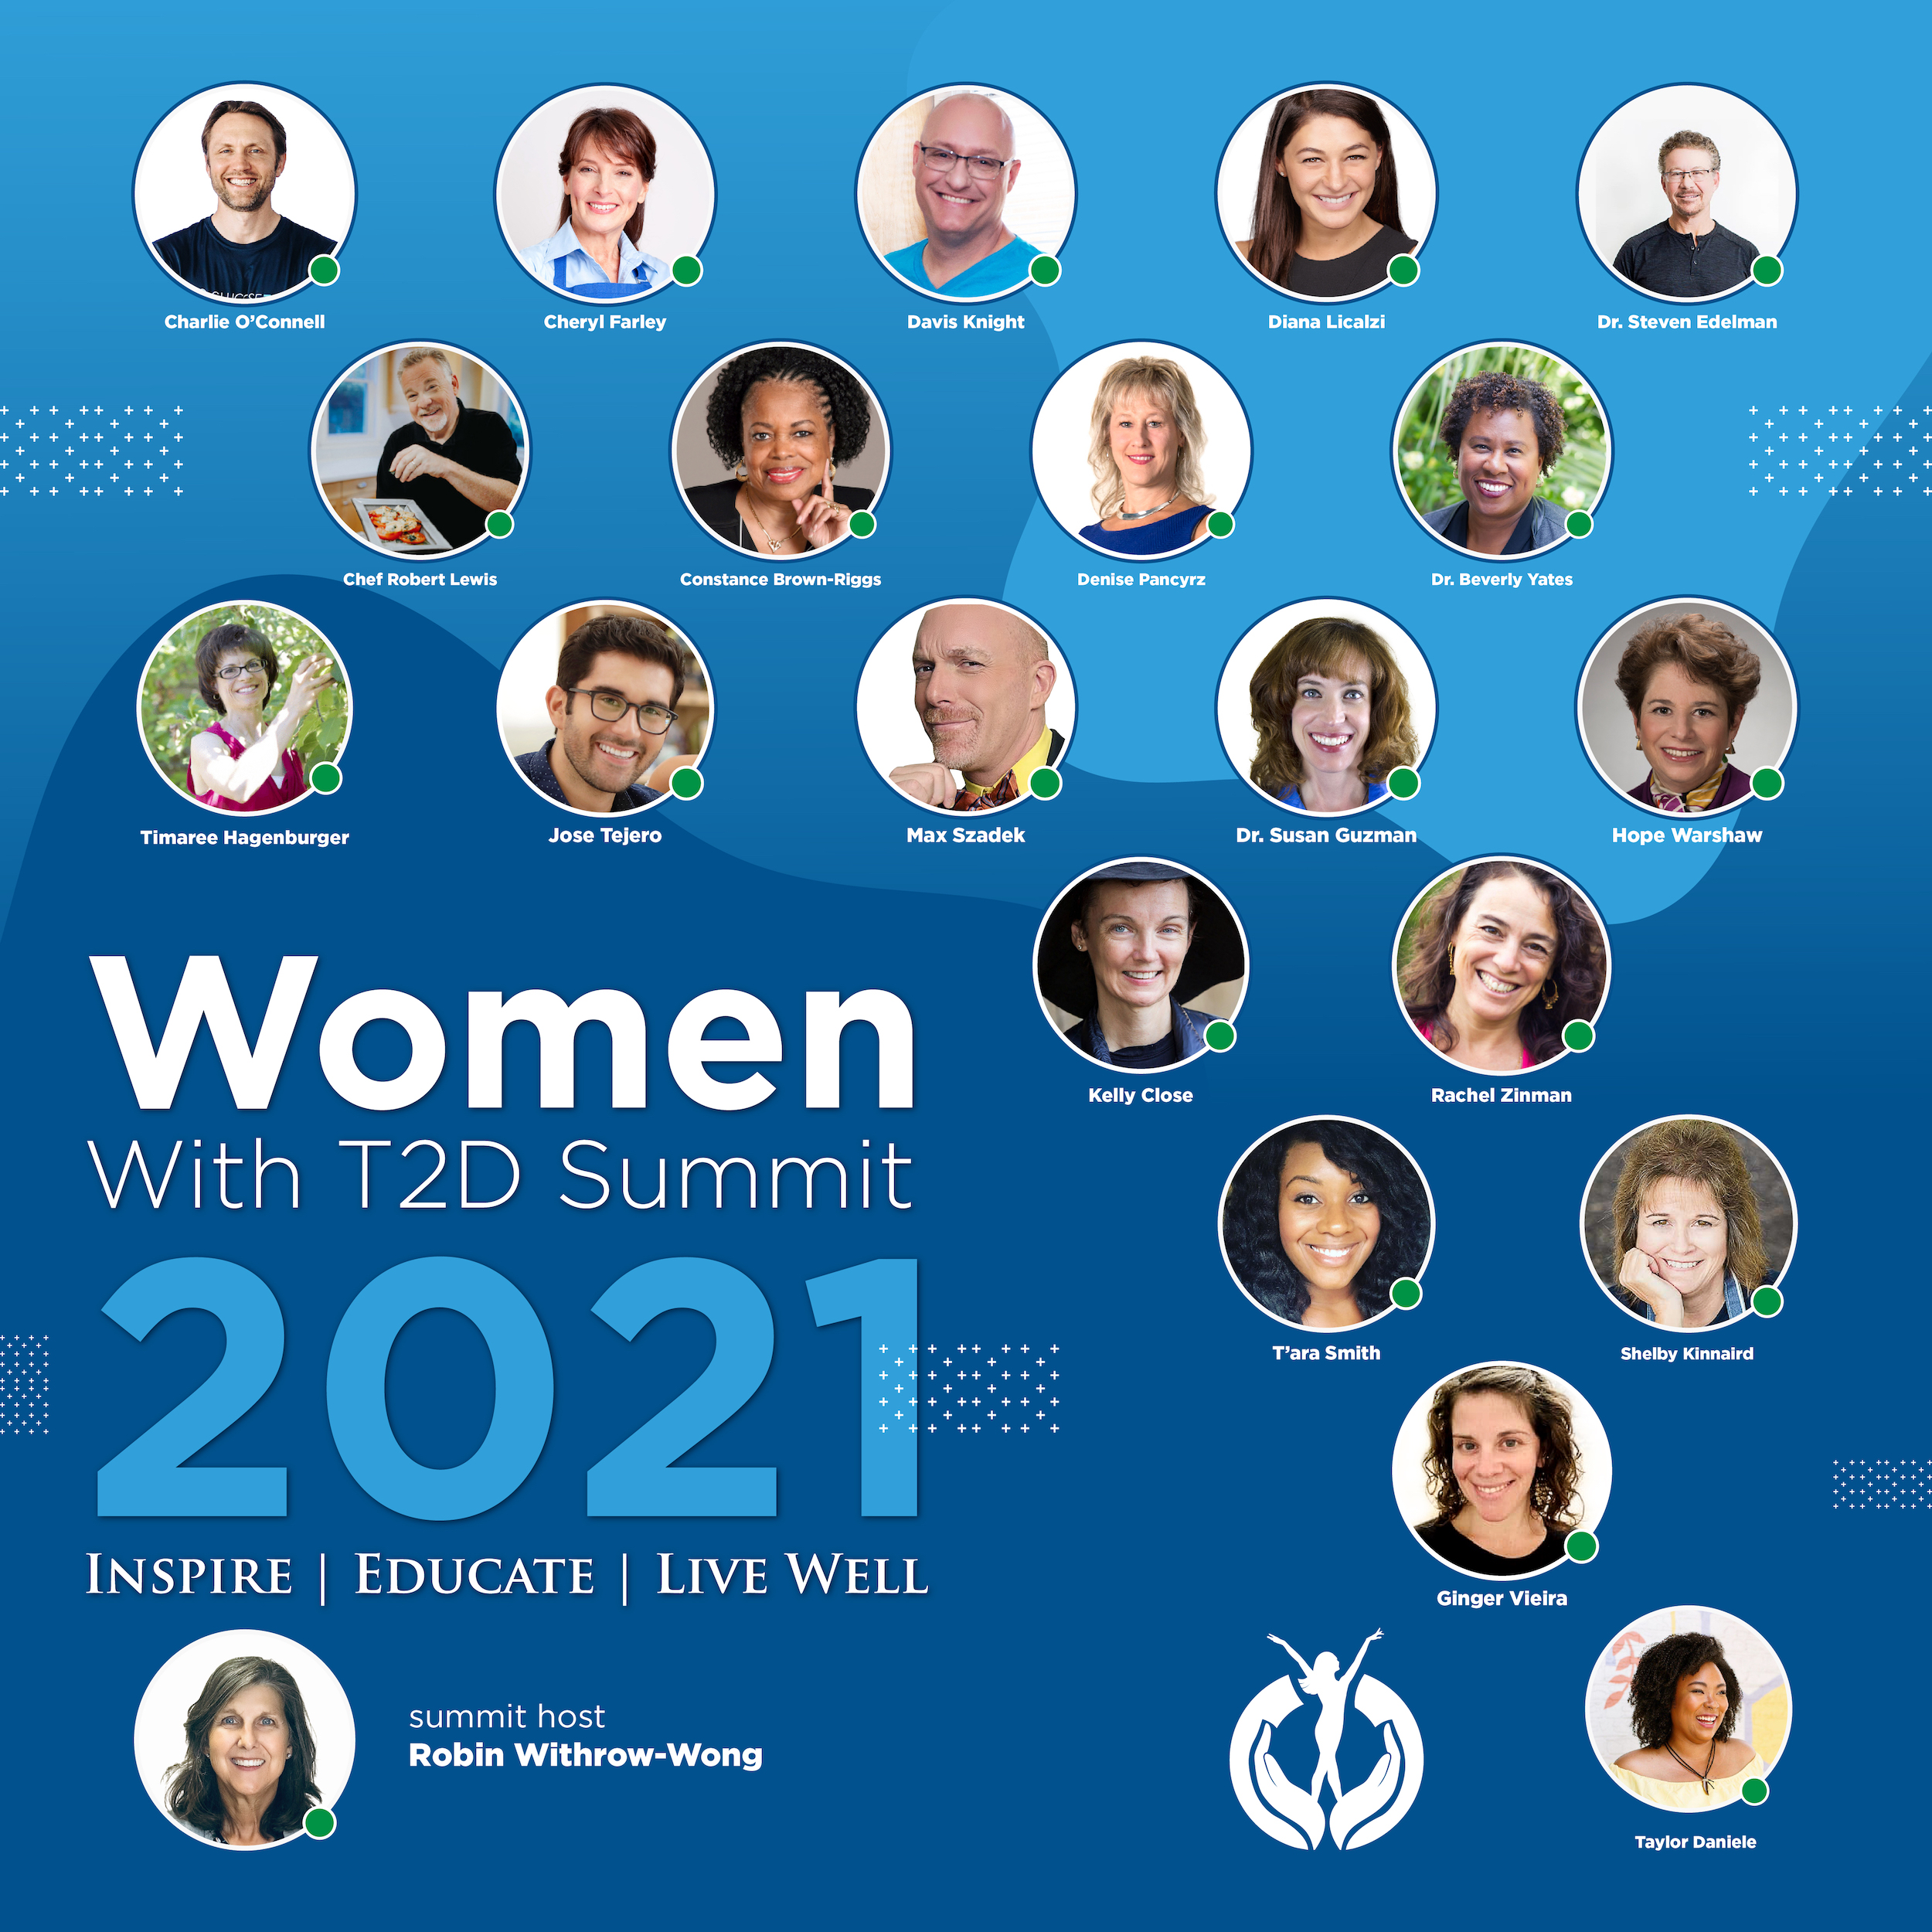 Women with T2D (Type 2 Diabetes) Virtual Summit – June 29-July 1 (FREE!)